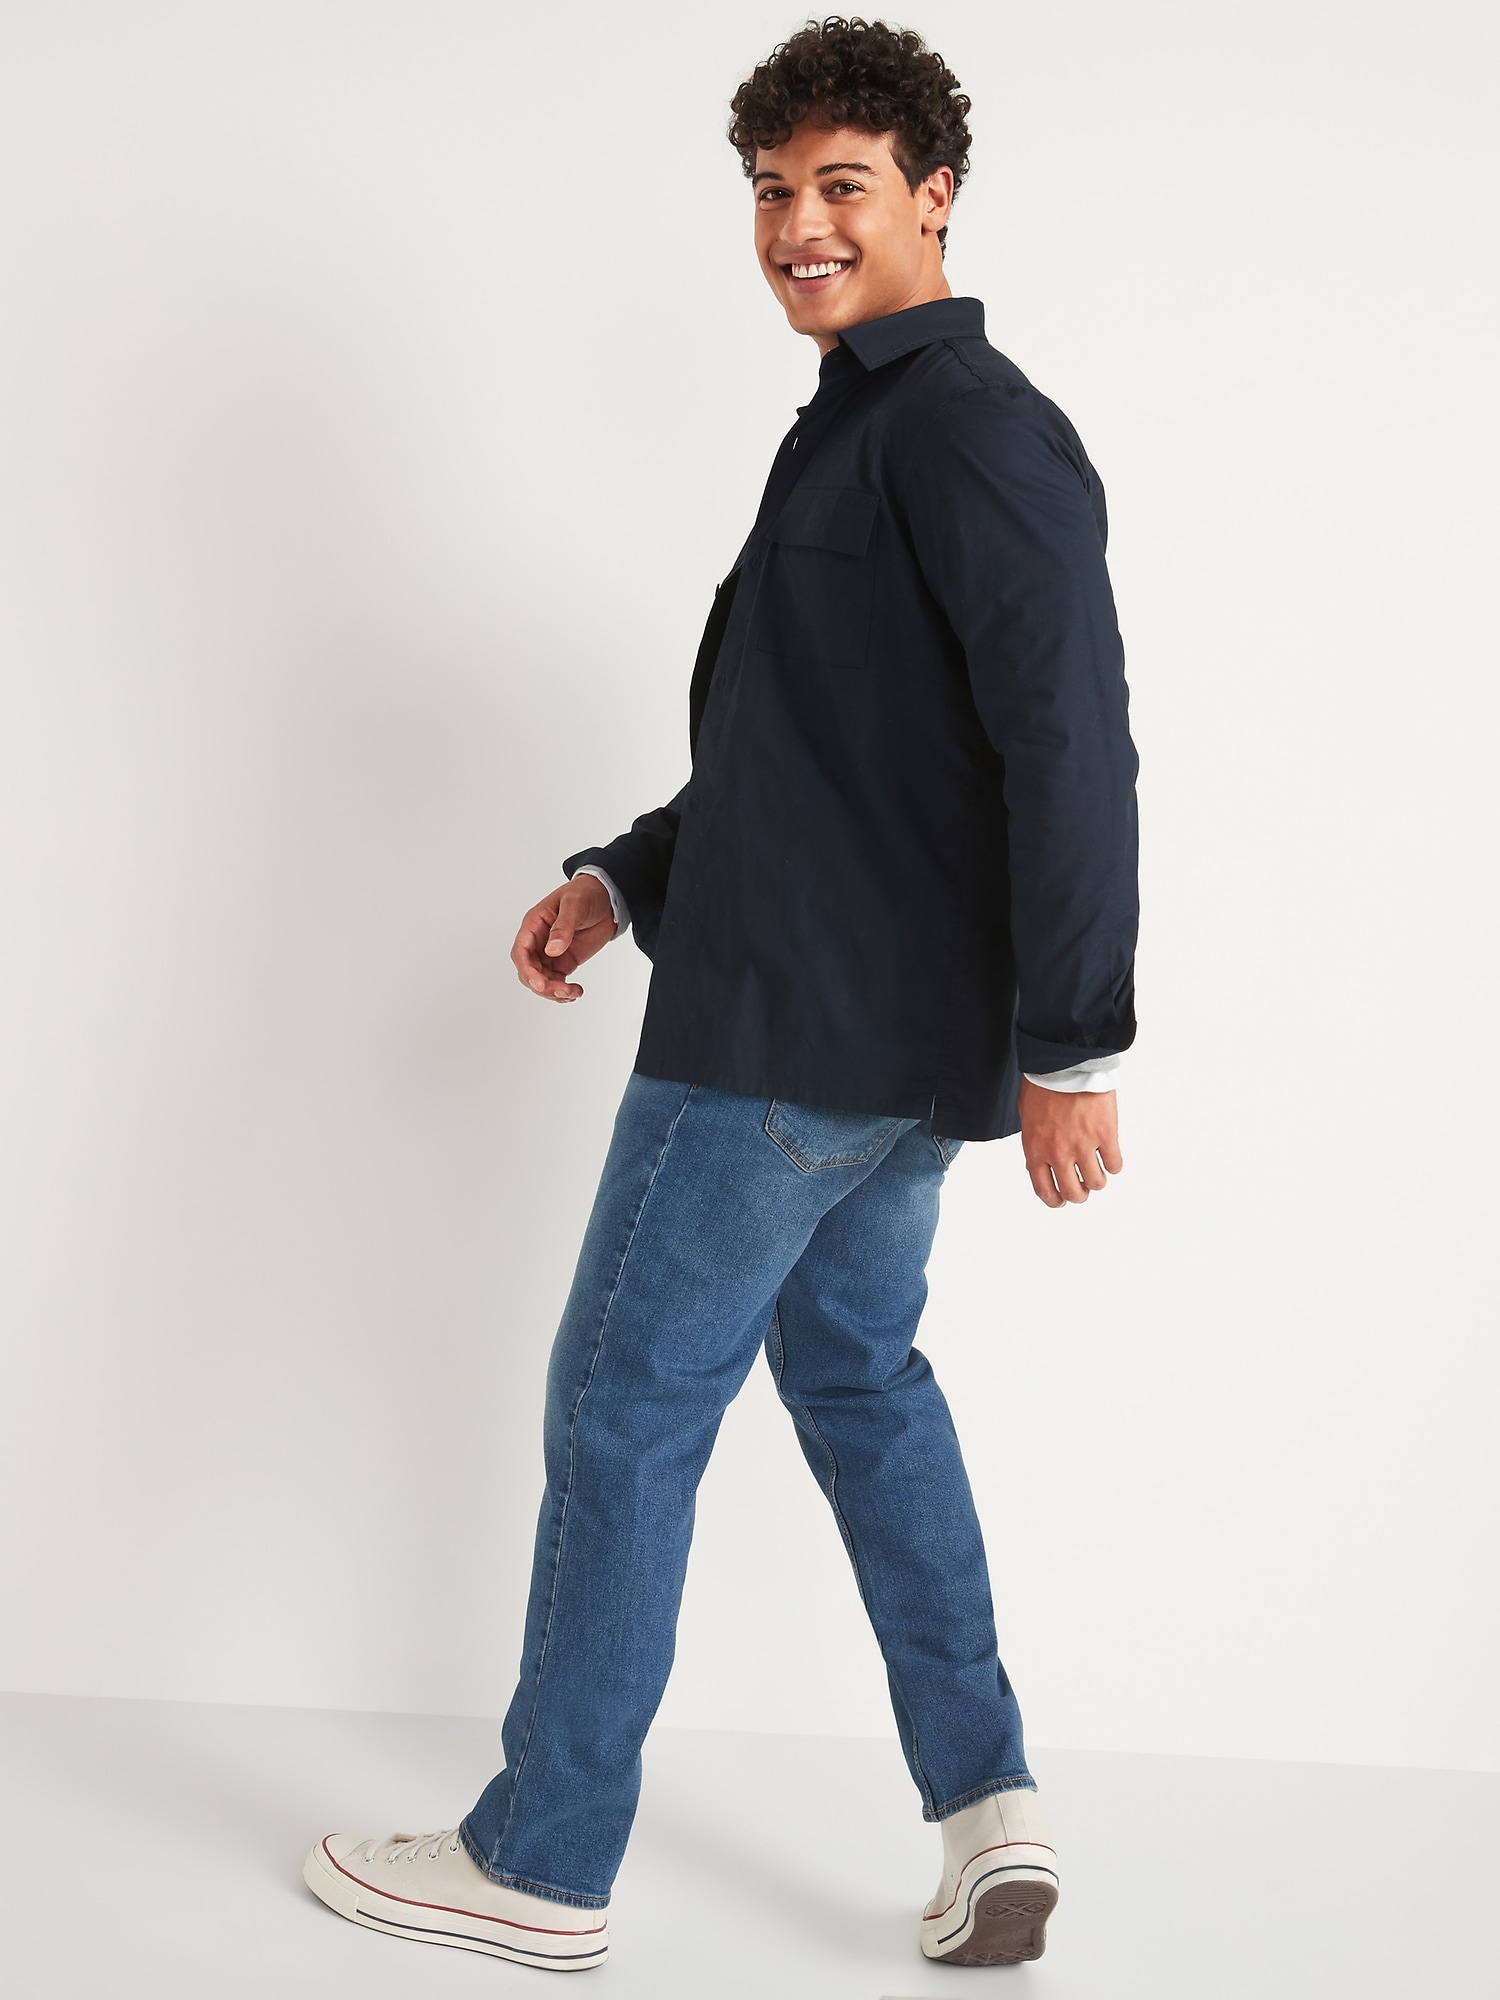 Straight Built-In Flex Jeans For Men | Old Navy